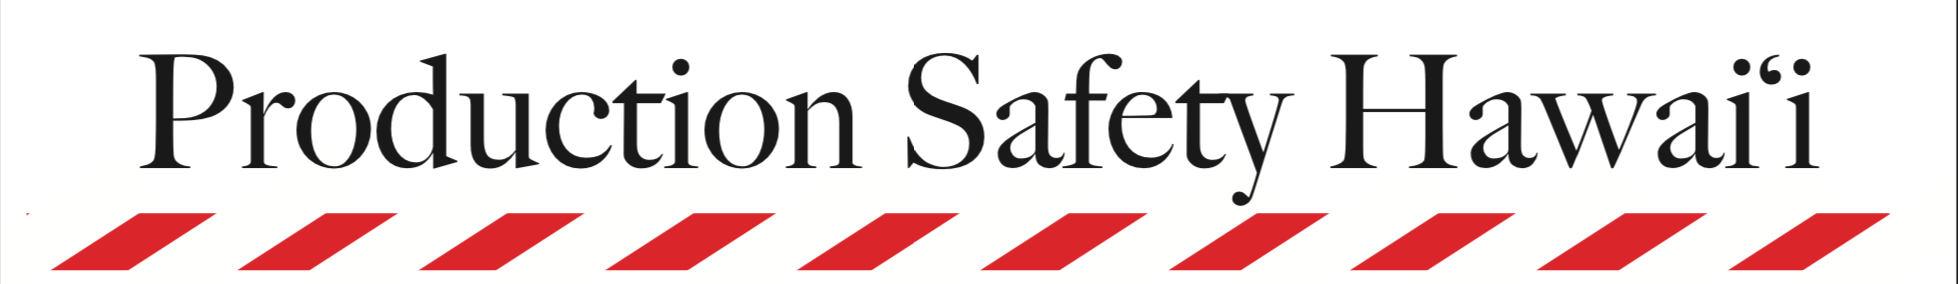 covid compliance hawaii production safety hawaii logo